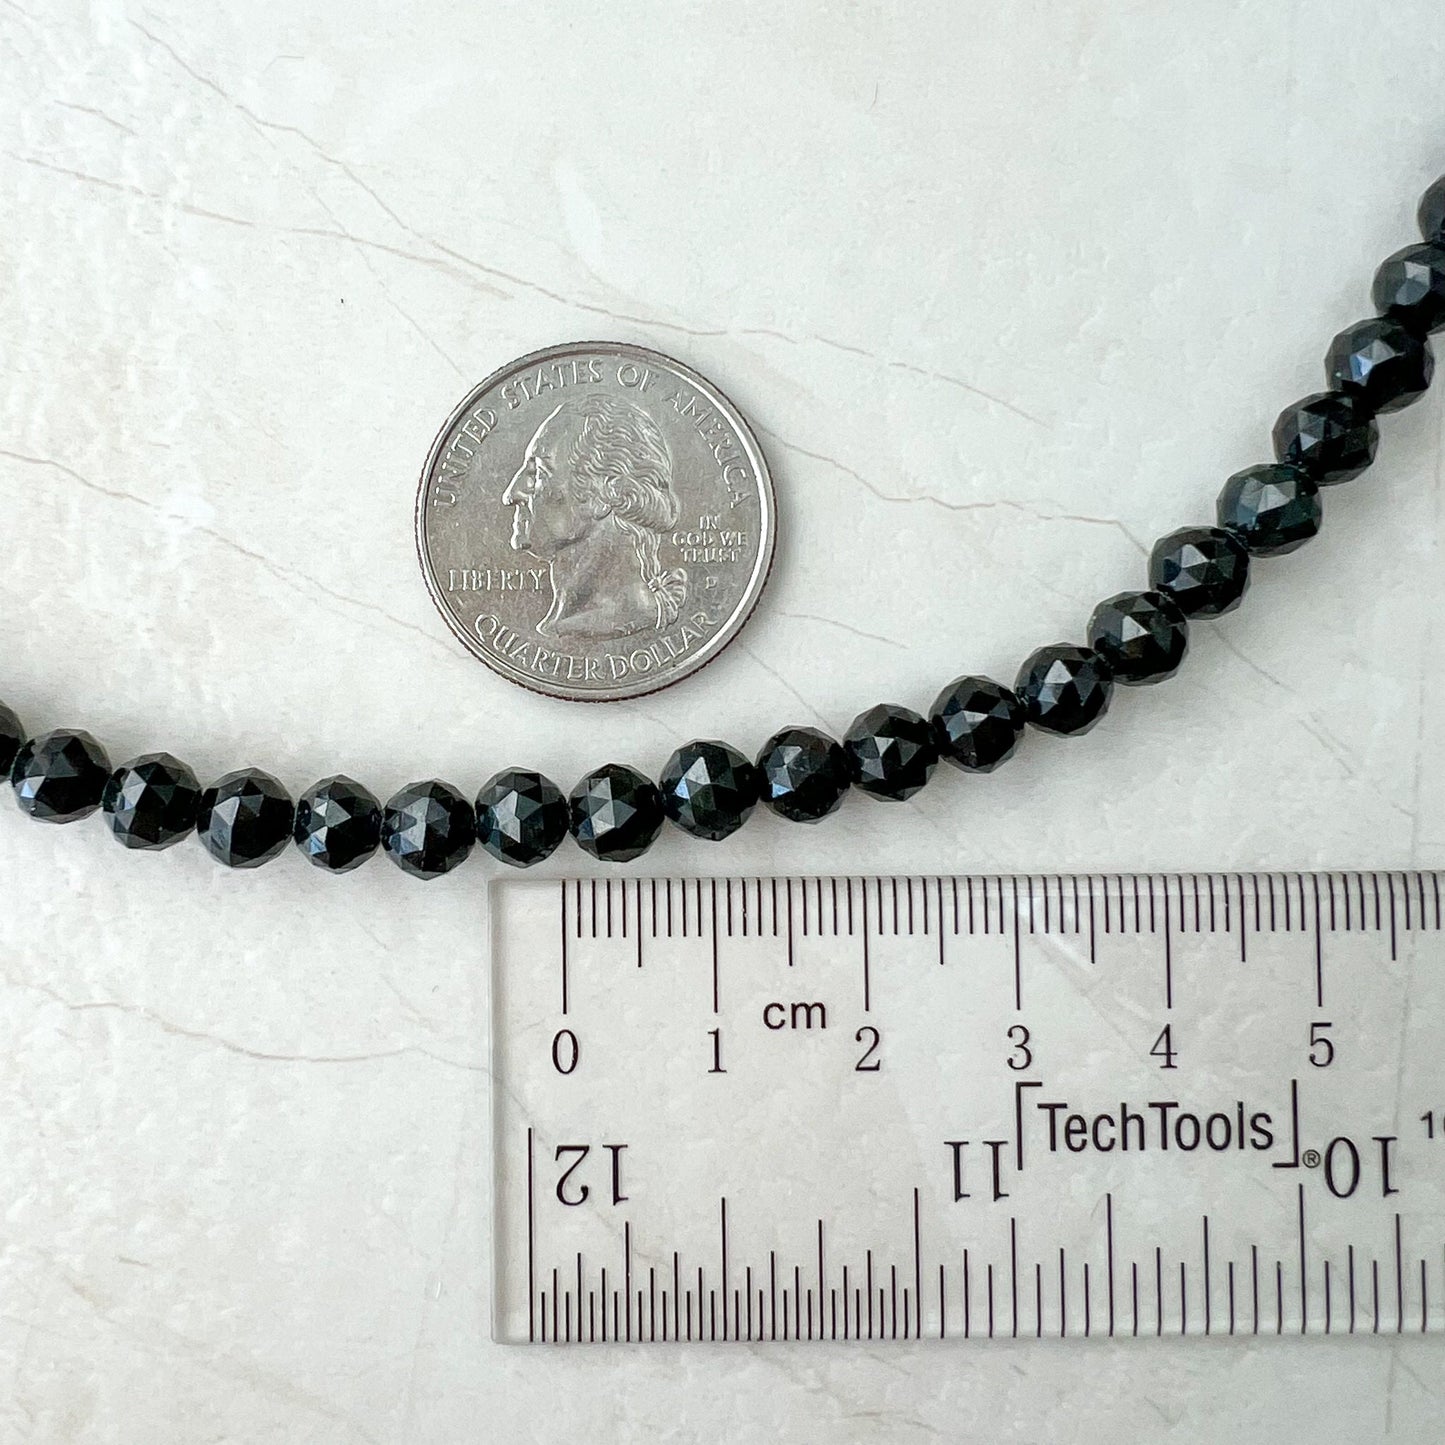 6.5 mm 108 Black Jadeite Jade Diamond Cut Mala Prayer Beads Necklace Bracelet, Omphacite Jade, FCSG-1221-1667769423 - AriaDesignCollection